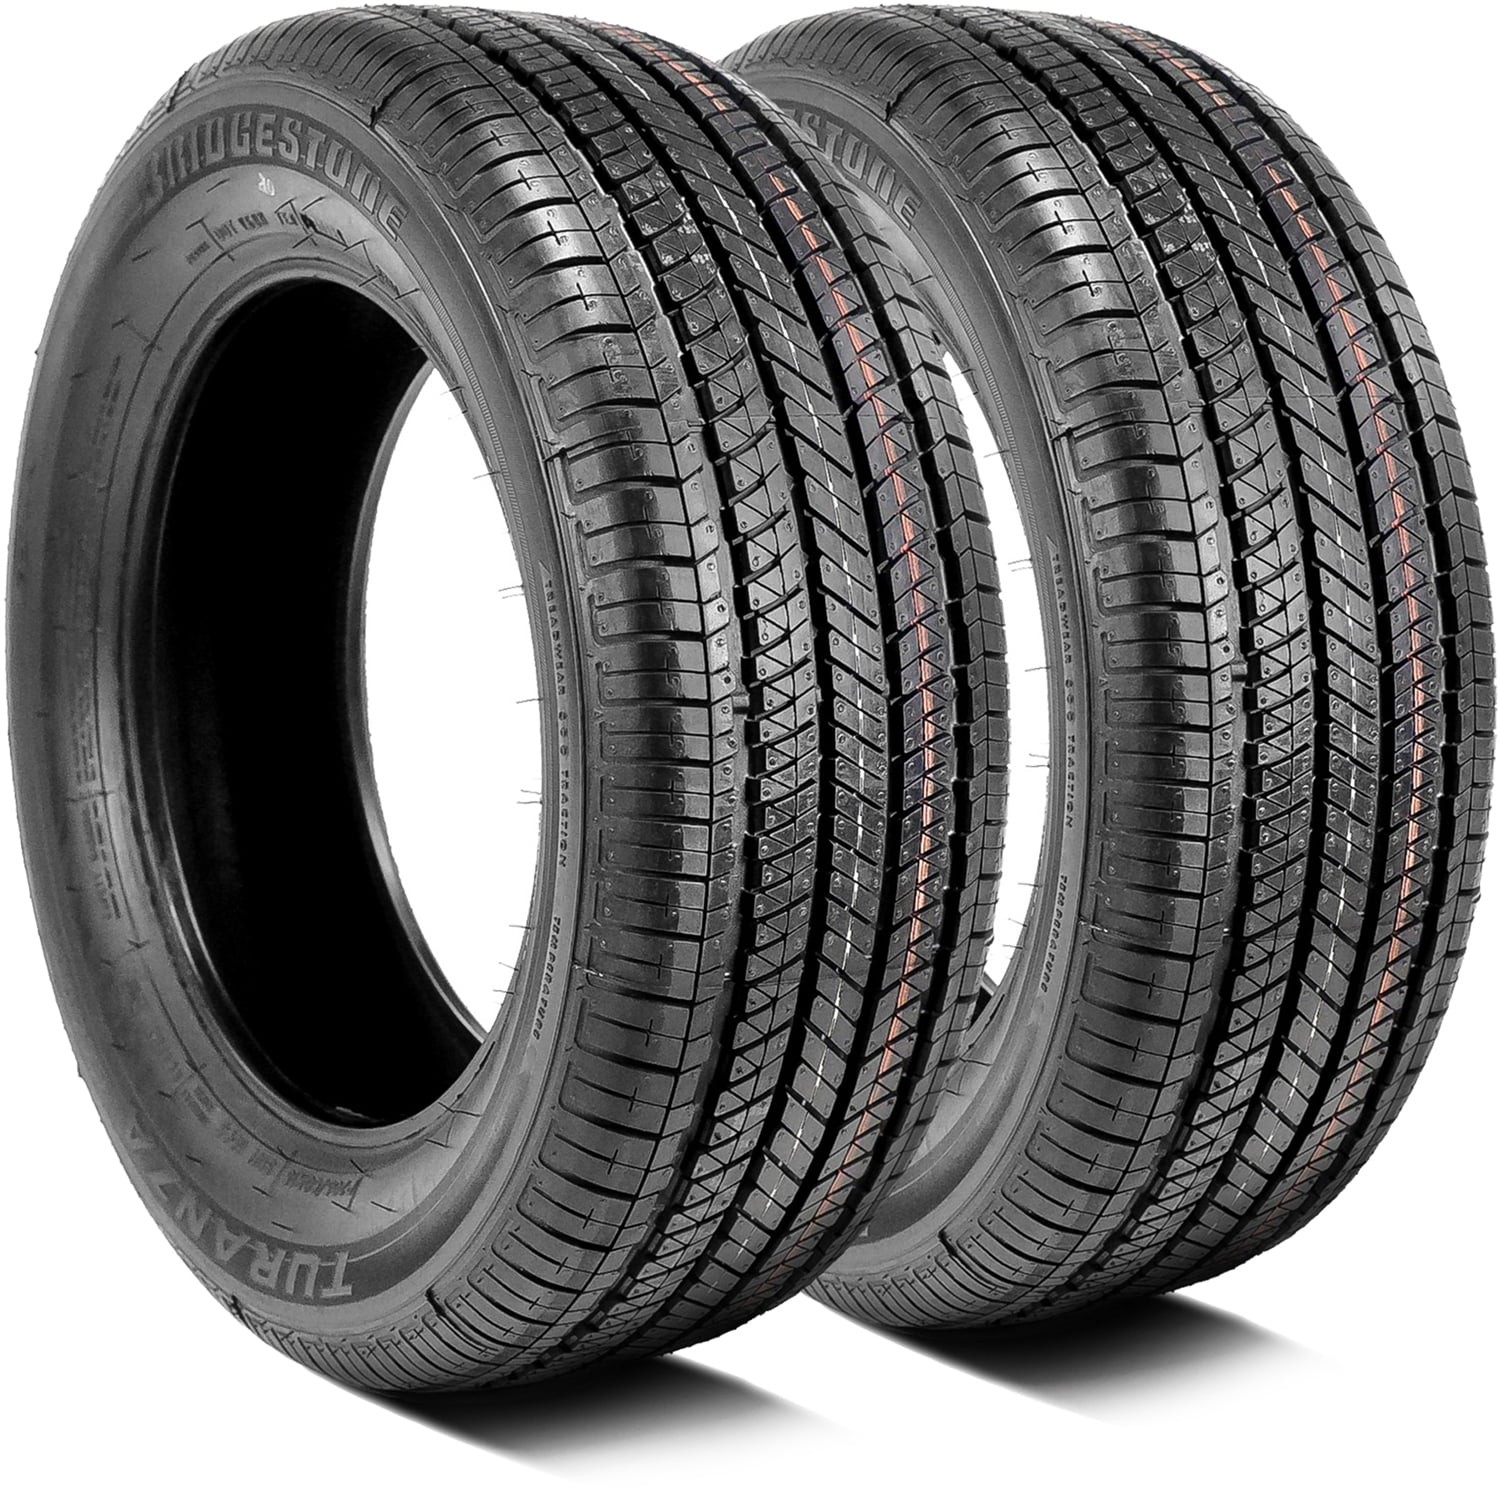 Bridgestone Turanza EL400-02 All Season 255/35R18 90W Passenger Tire